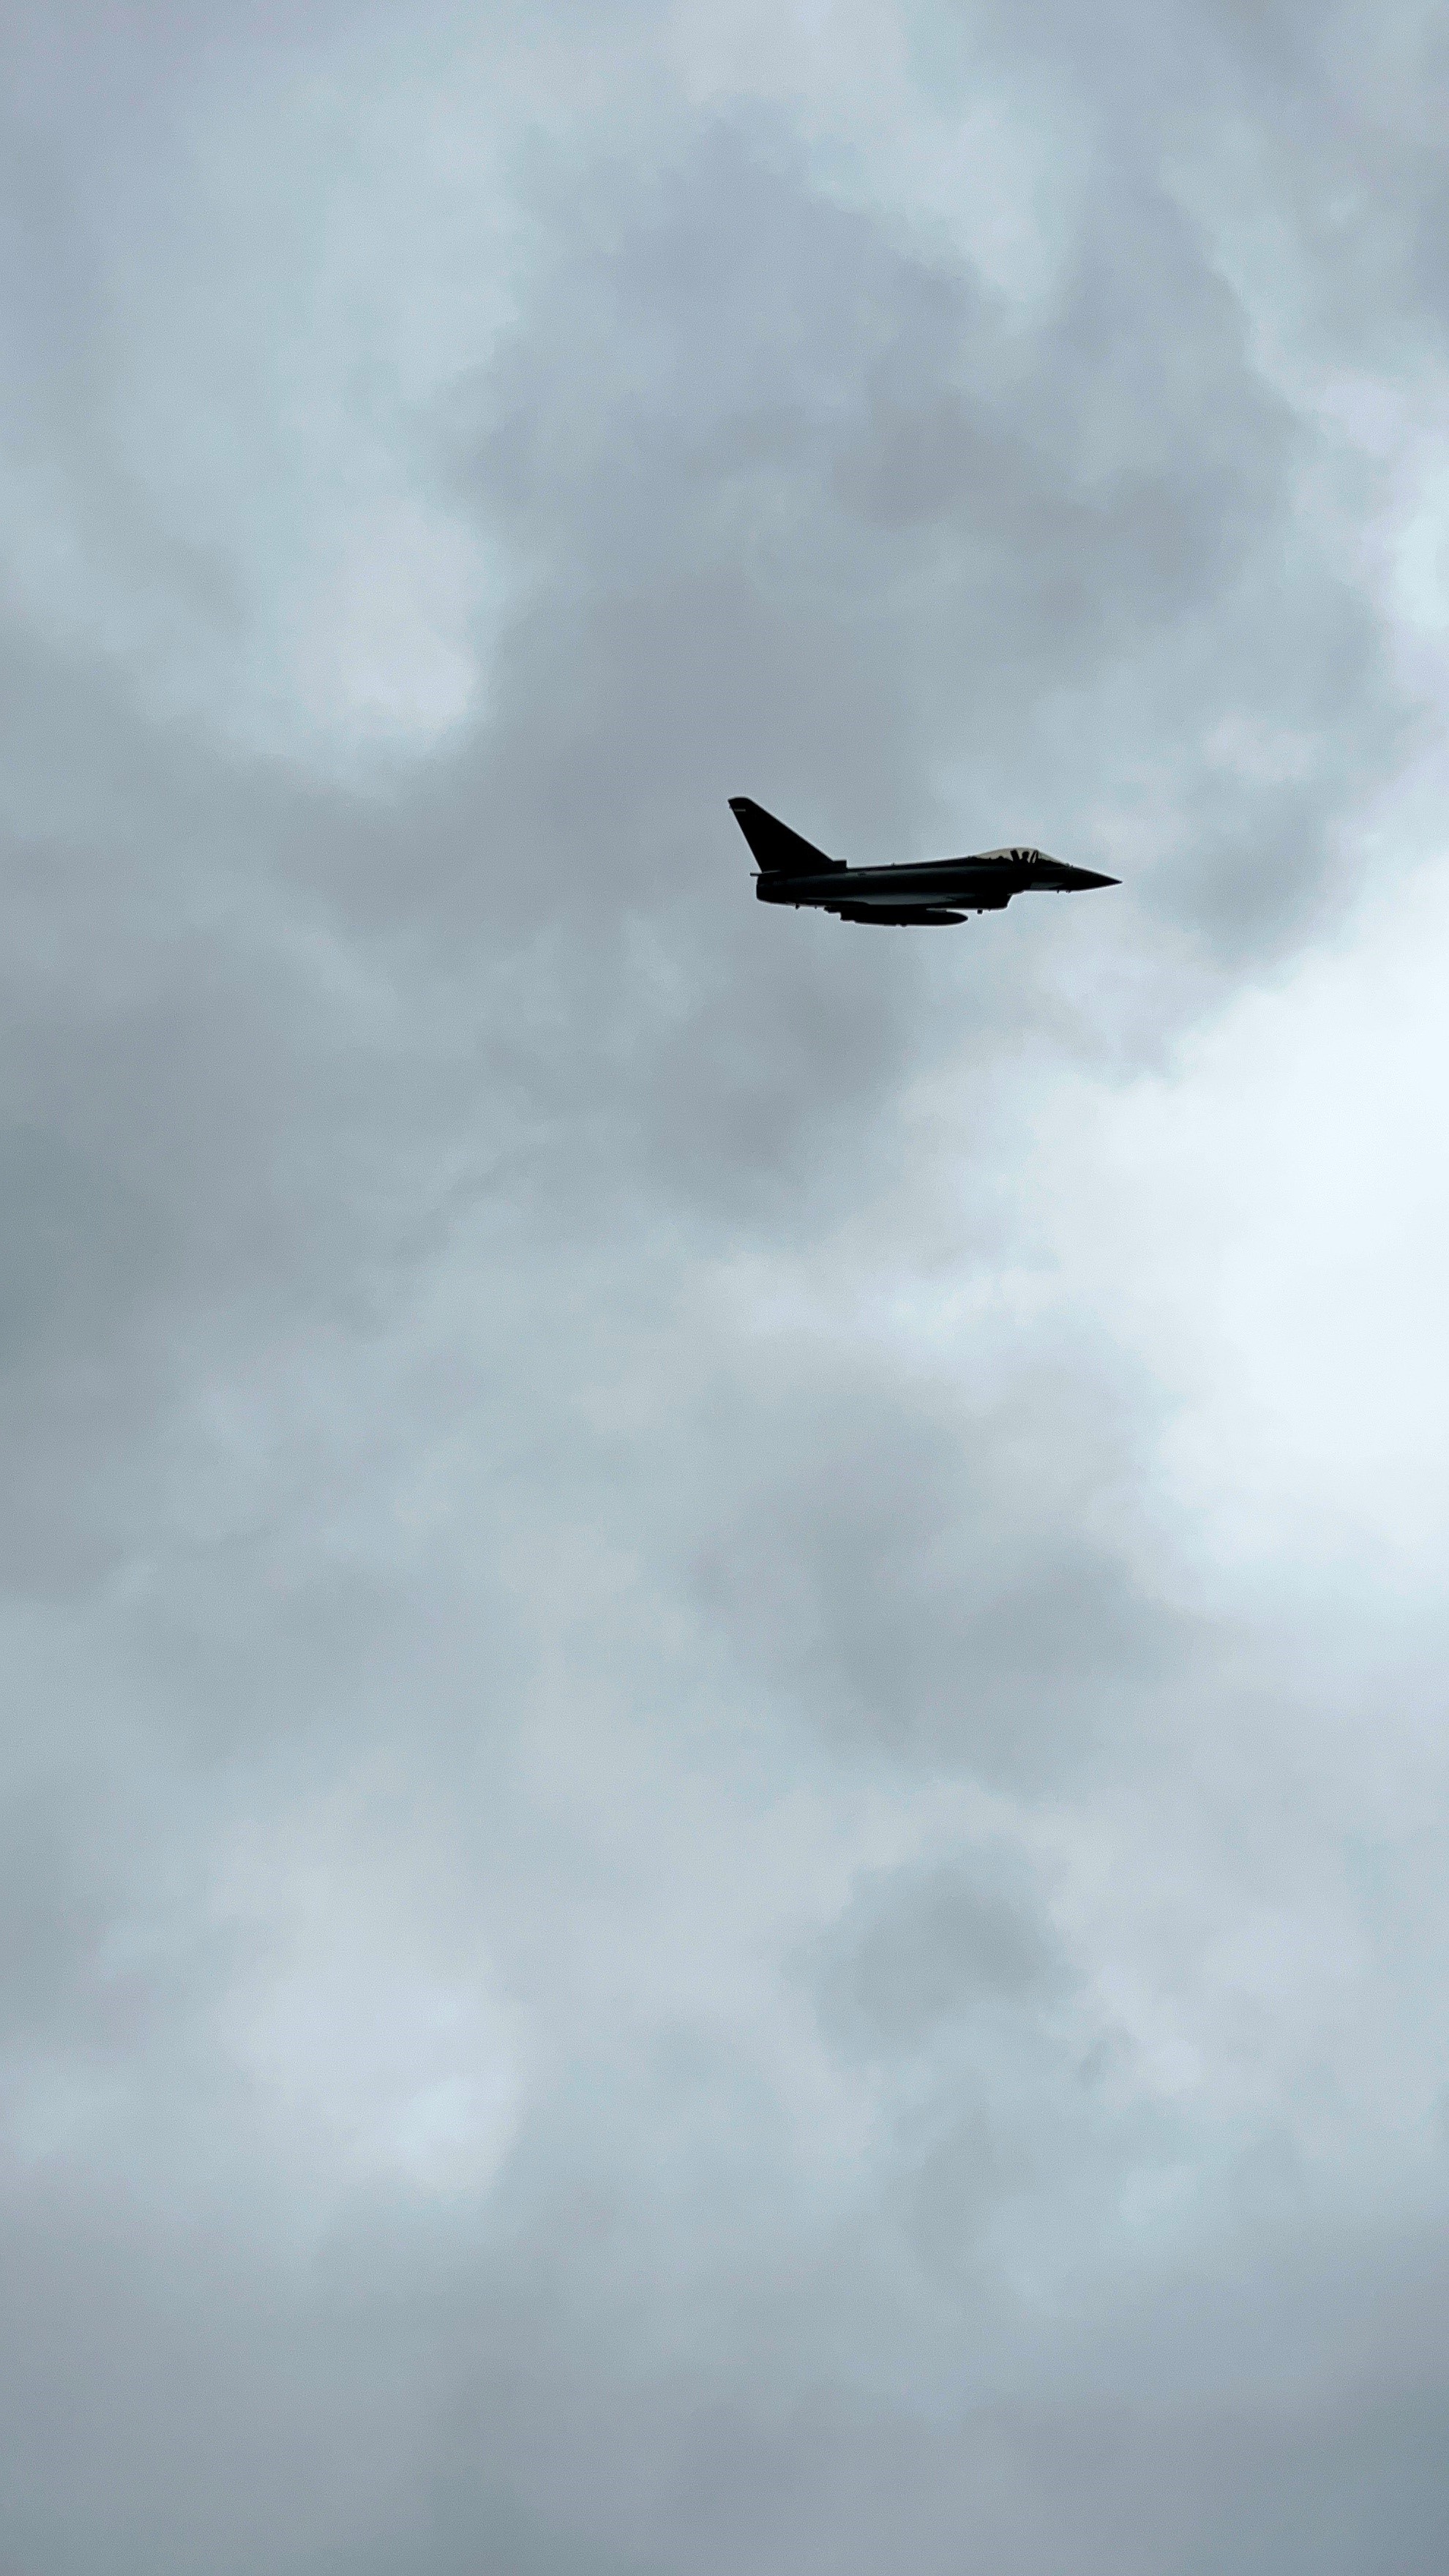 Image shows Typhoon in flight.